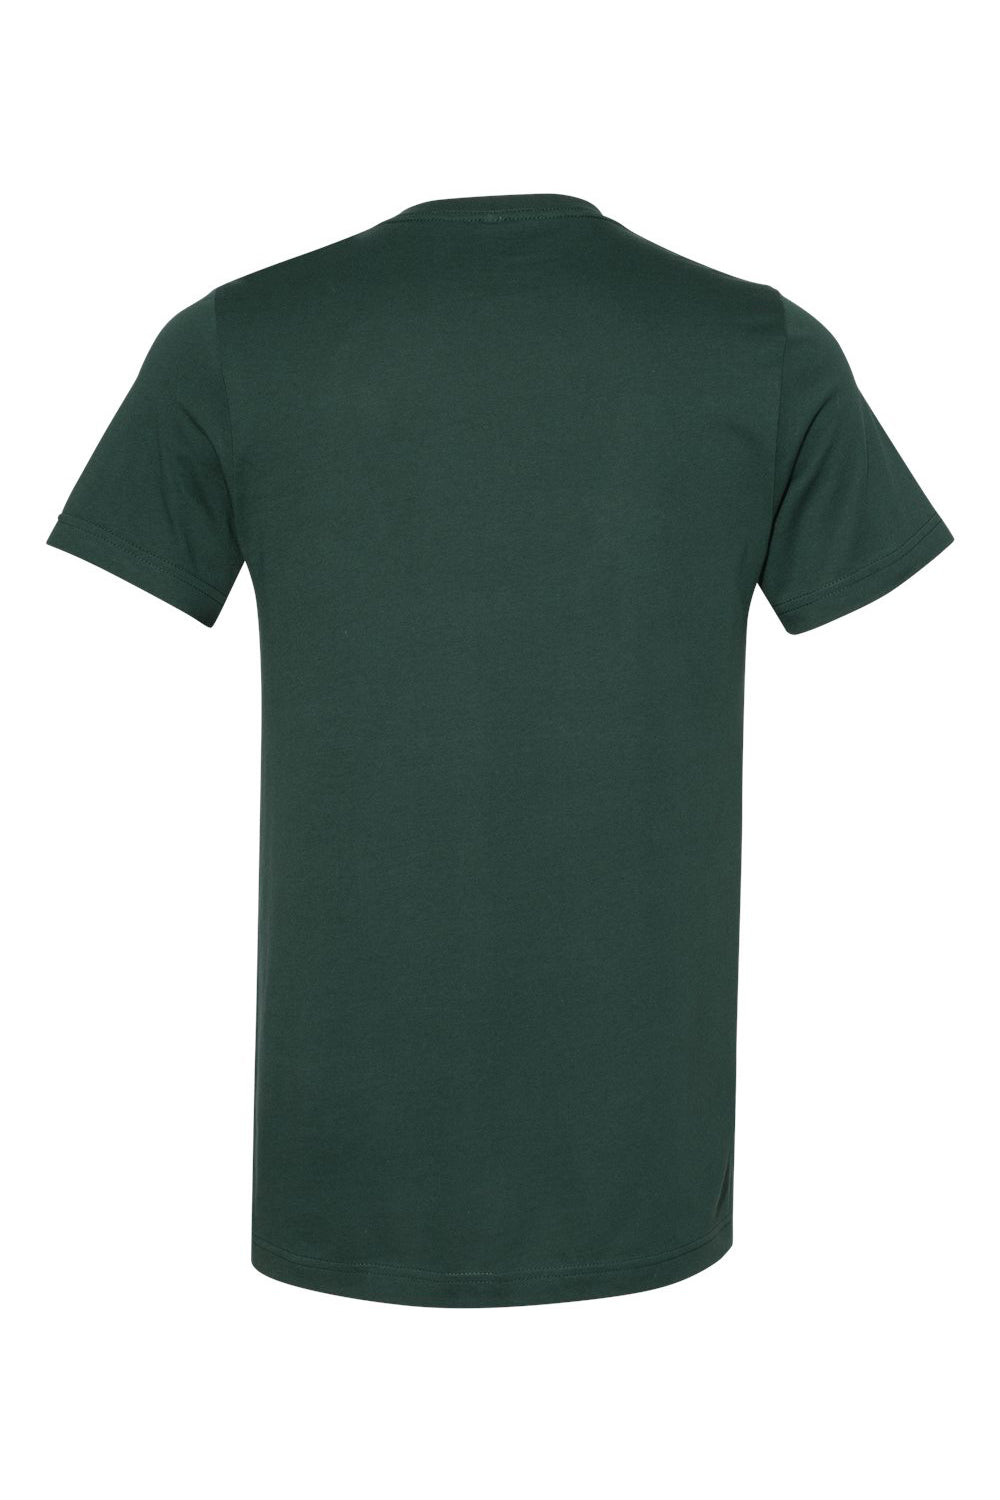 Bella + Canvas BC3005/3005/3655C Mens Jersey Short Sleeve V-Neck T-Shirt Forest Green Flat Back